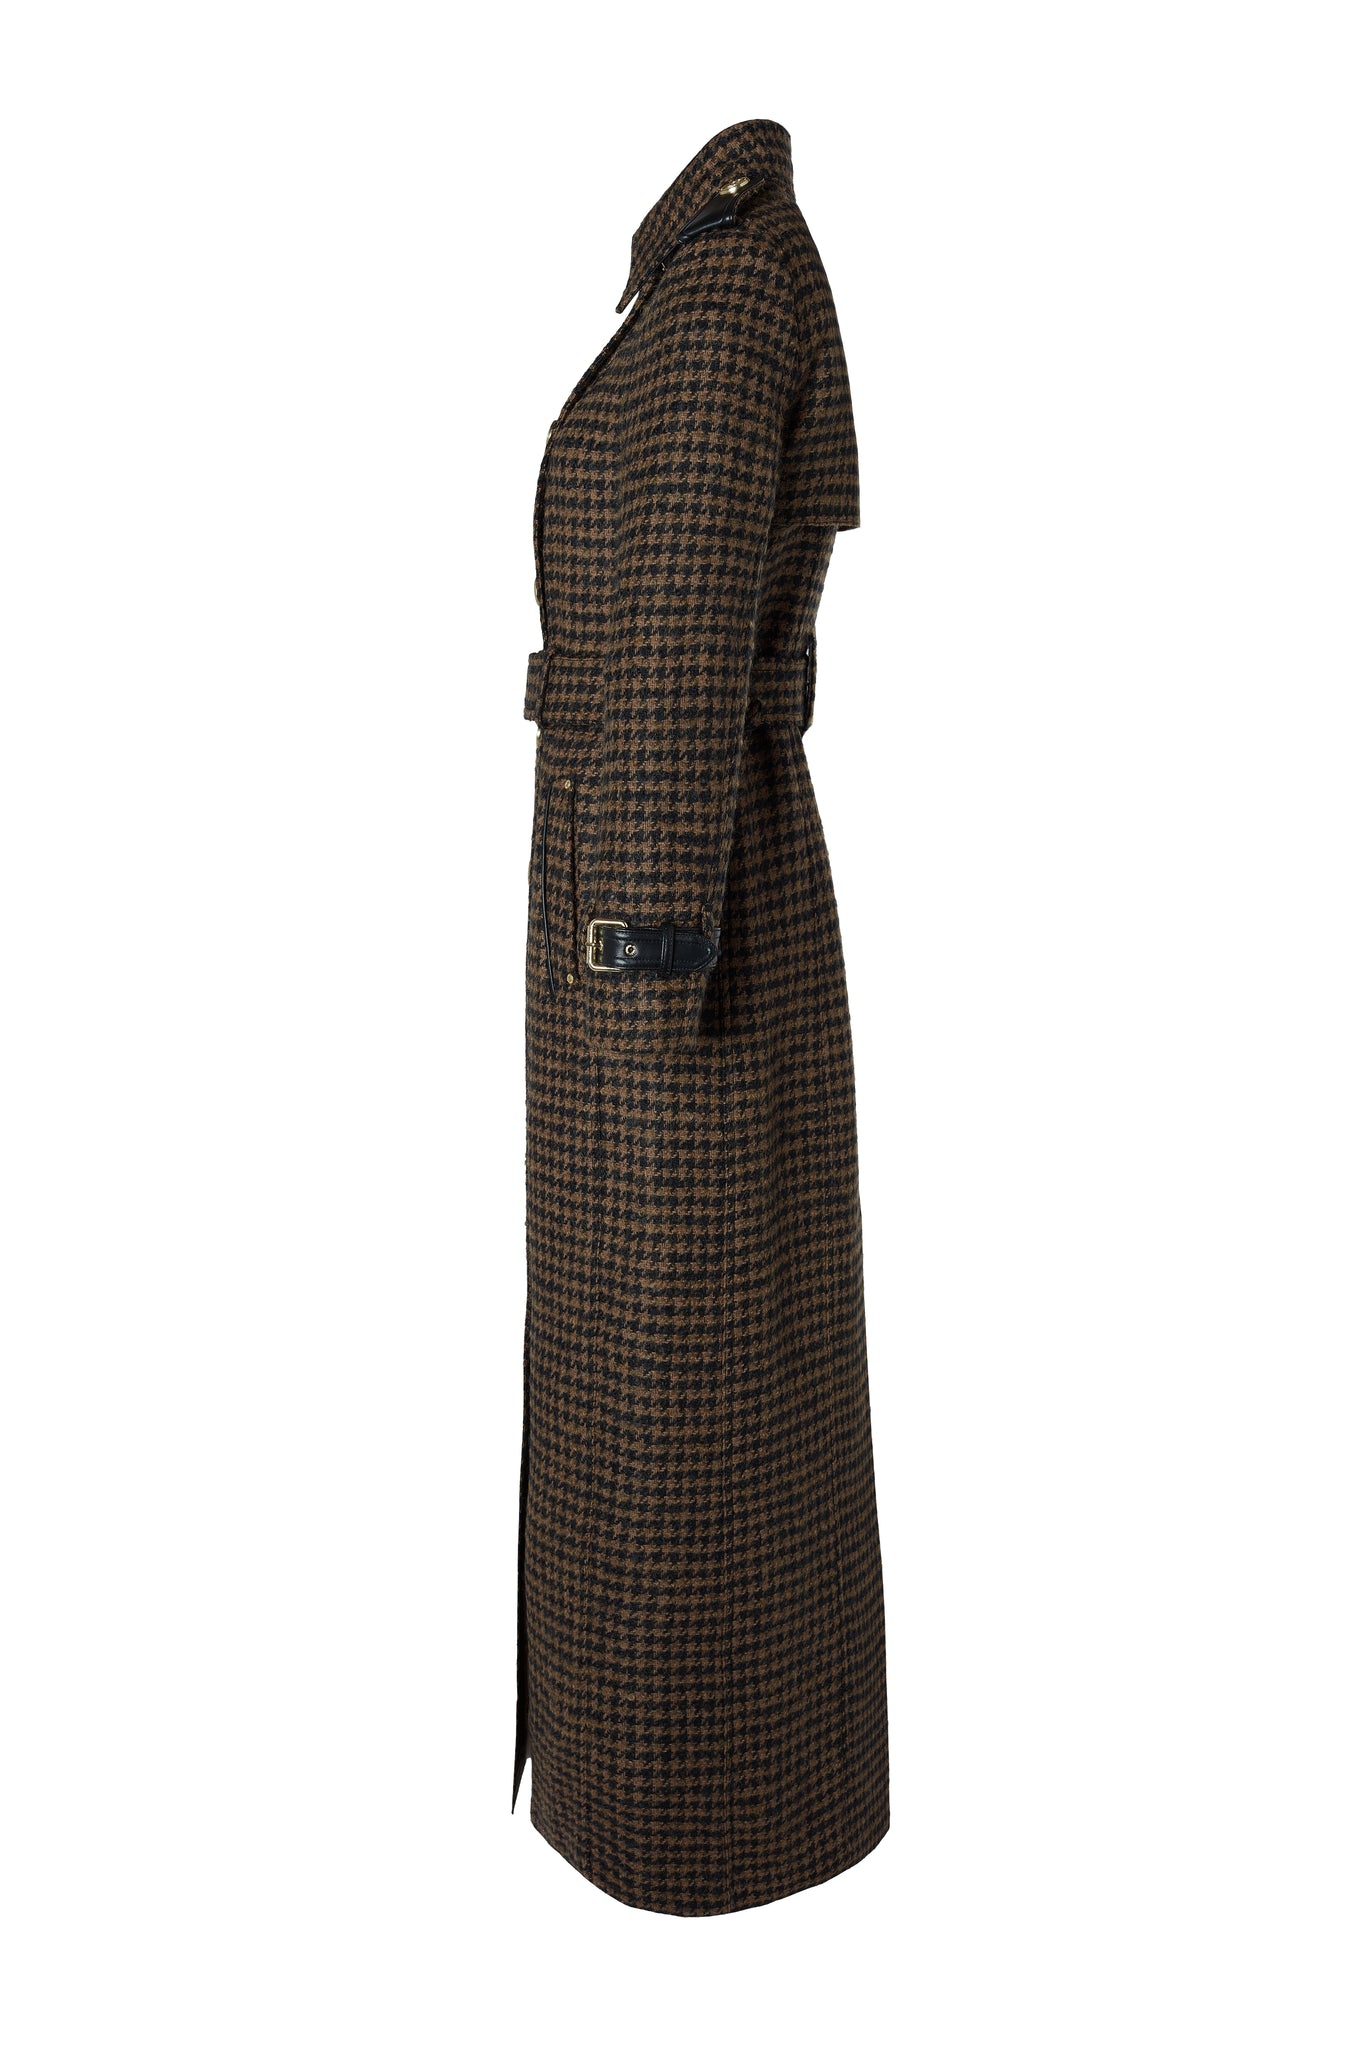 Full Length Marlborough Trench Coat (Chocolate Houndstooth)